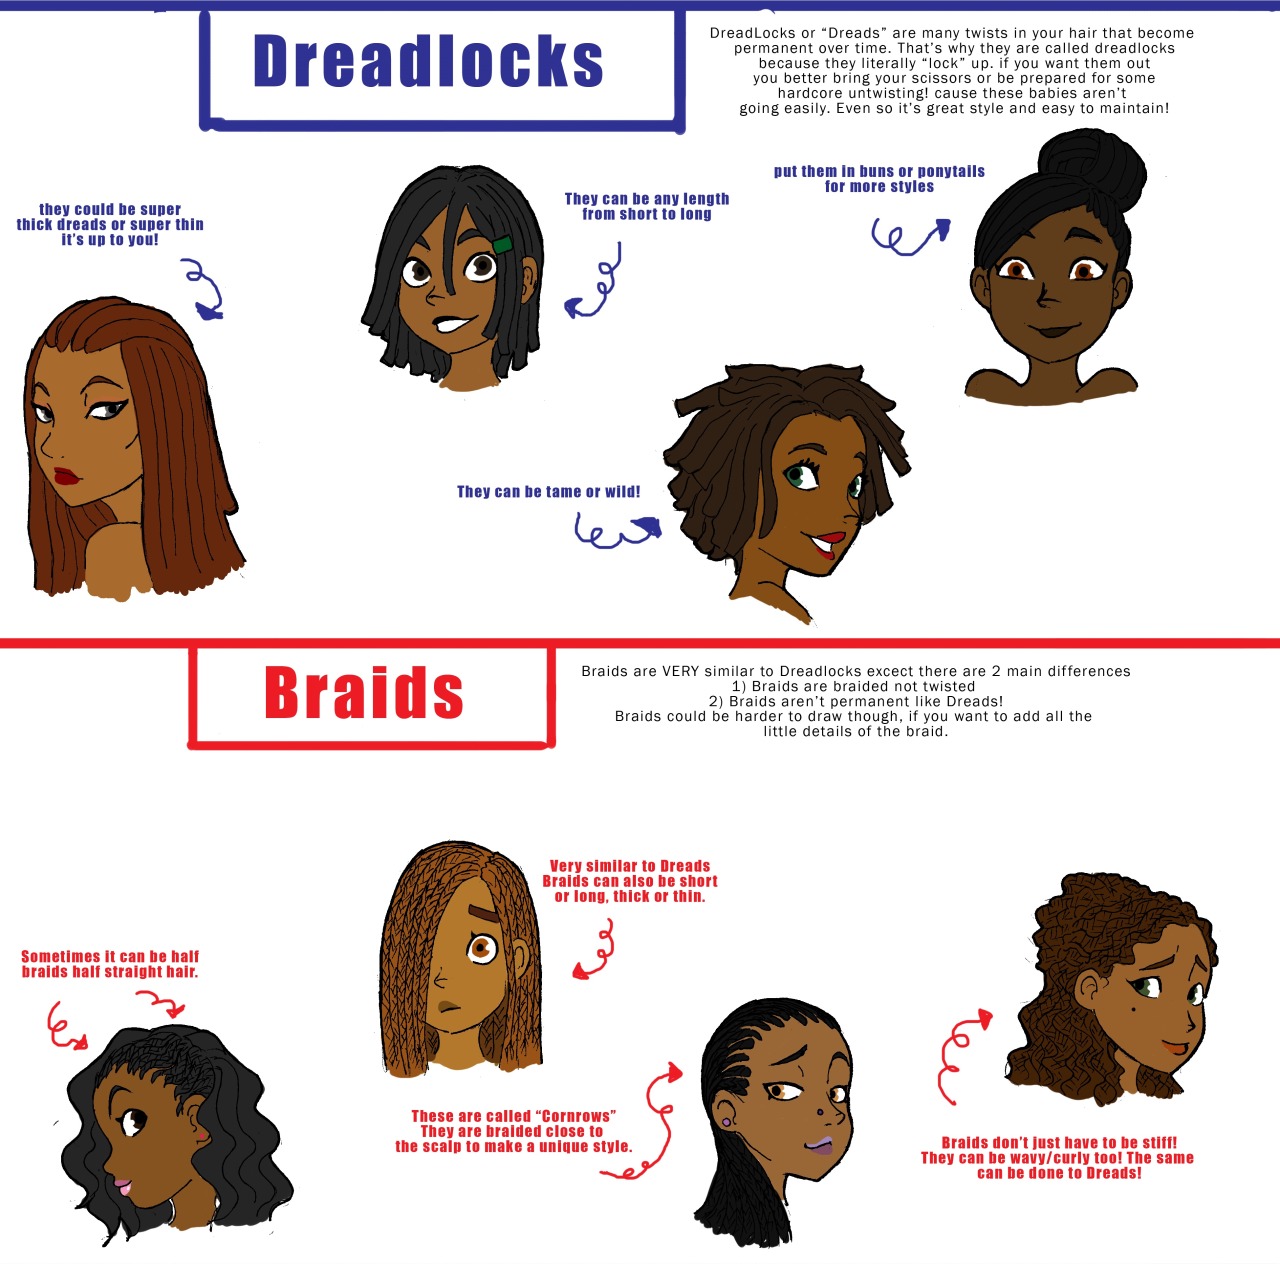 Digital drawings of black women illustrating how to draw dreadlocks and braids